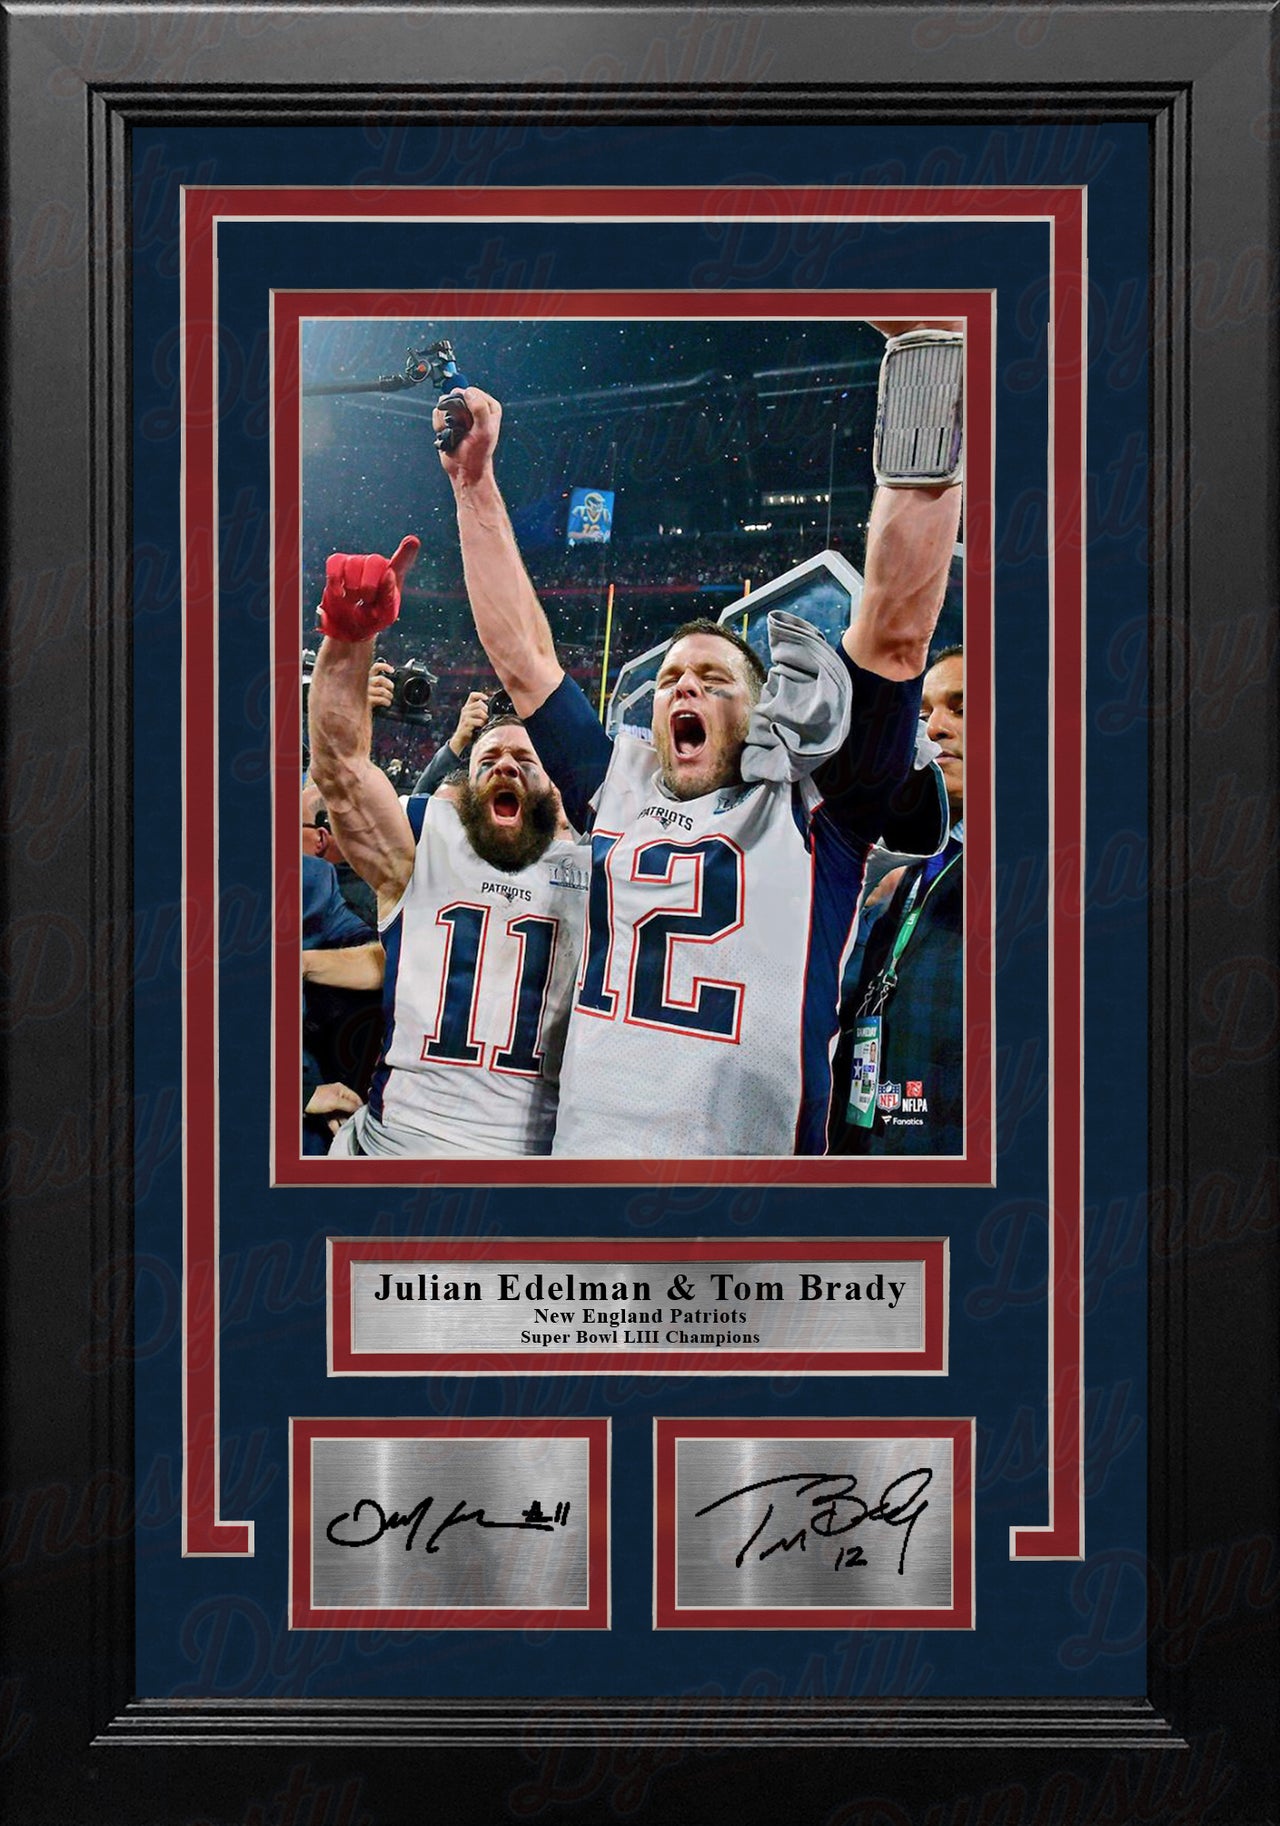 Julian Edelman & Tom Brady Super Bowl LIII Patriots 8x10 Framed Photo with Engraved Autographs - Dynasty Sports & Framing 